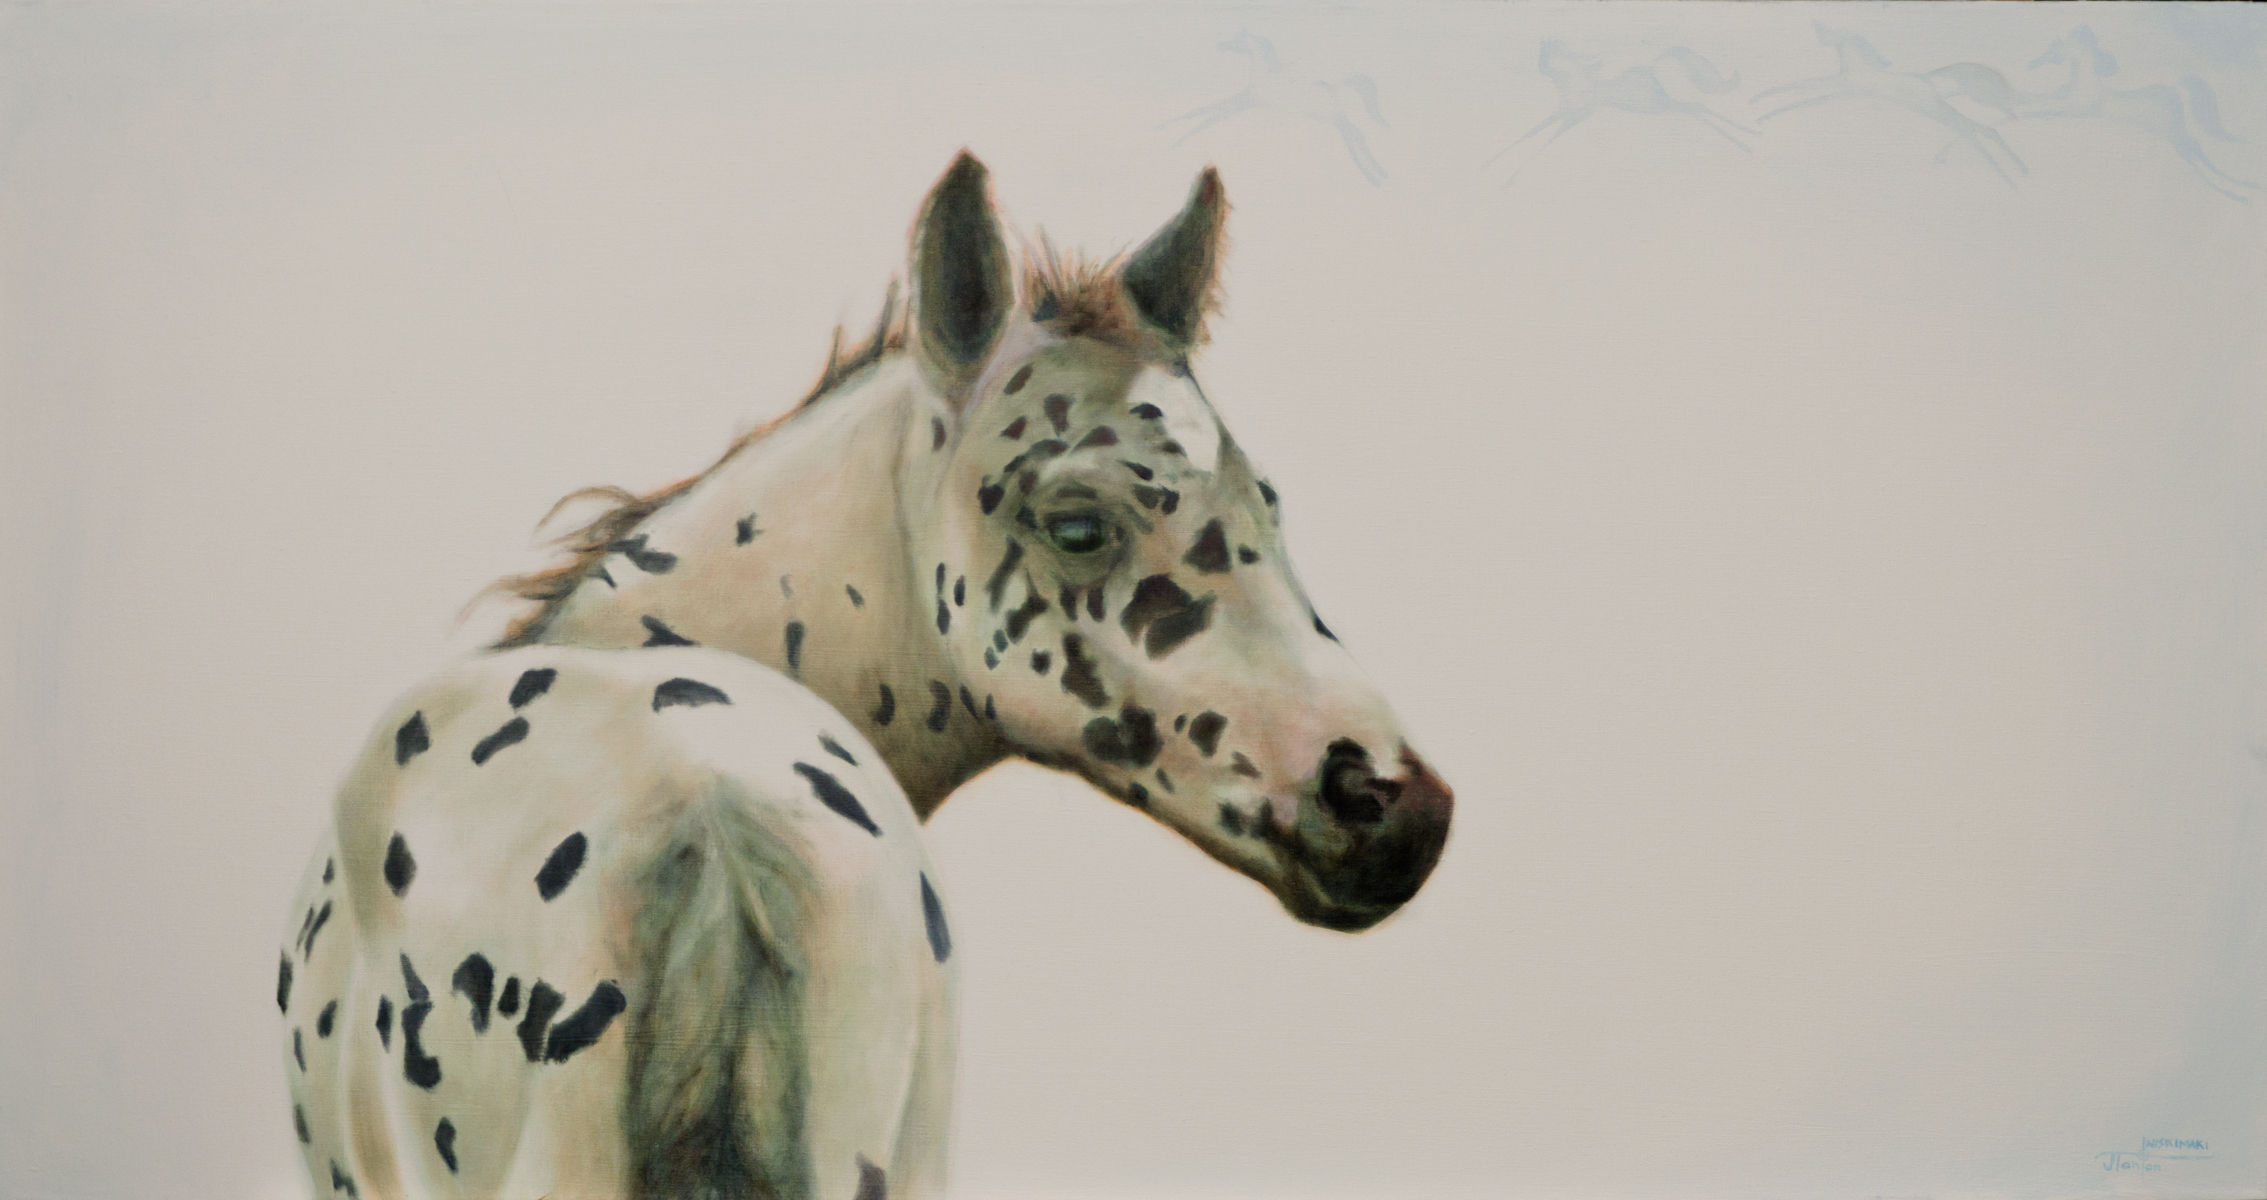 "Aitapissko Ponokamitaa" (Sacred Place with Living Presence Horse) ©2014 Janice Tanton. Oil on linen. 24"x48"